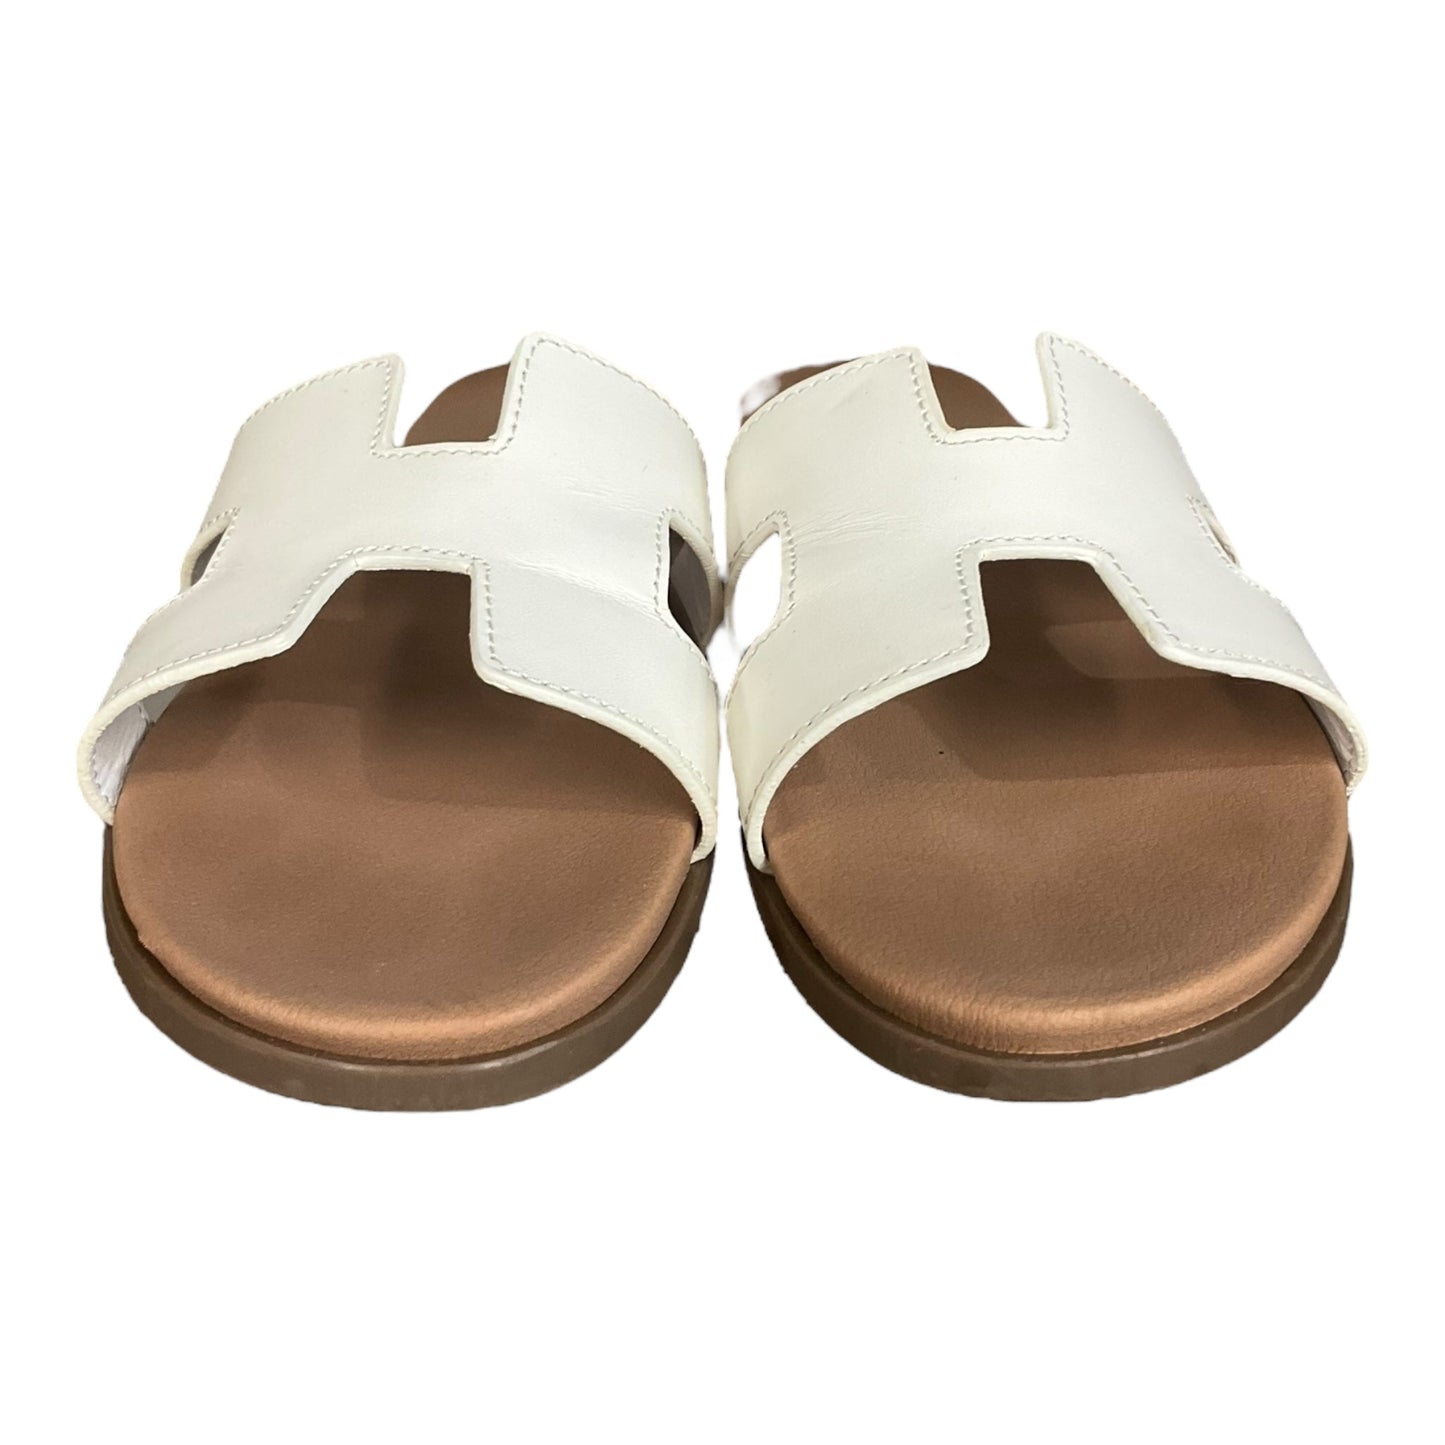 White Sandals Flats Steve Madden, Size 10